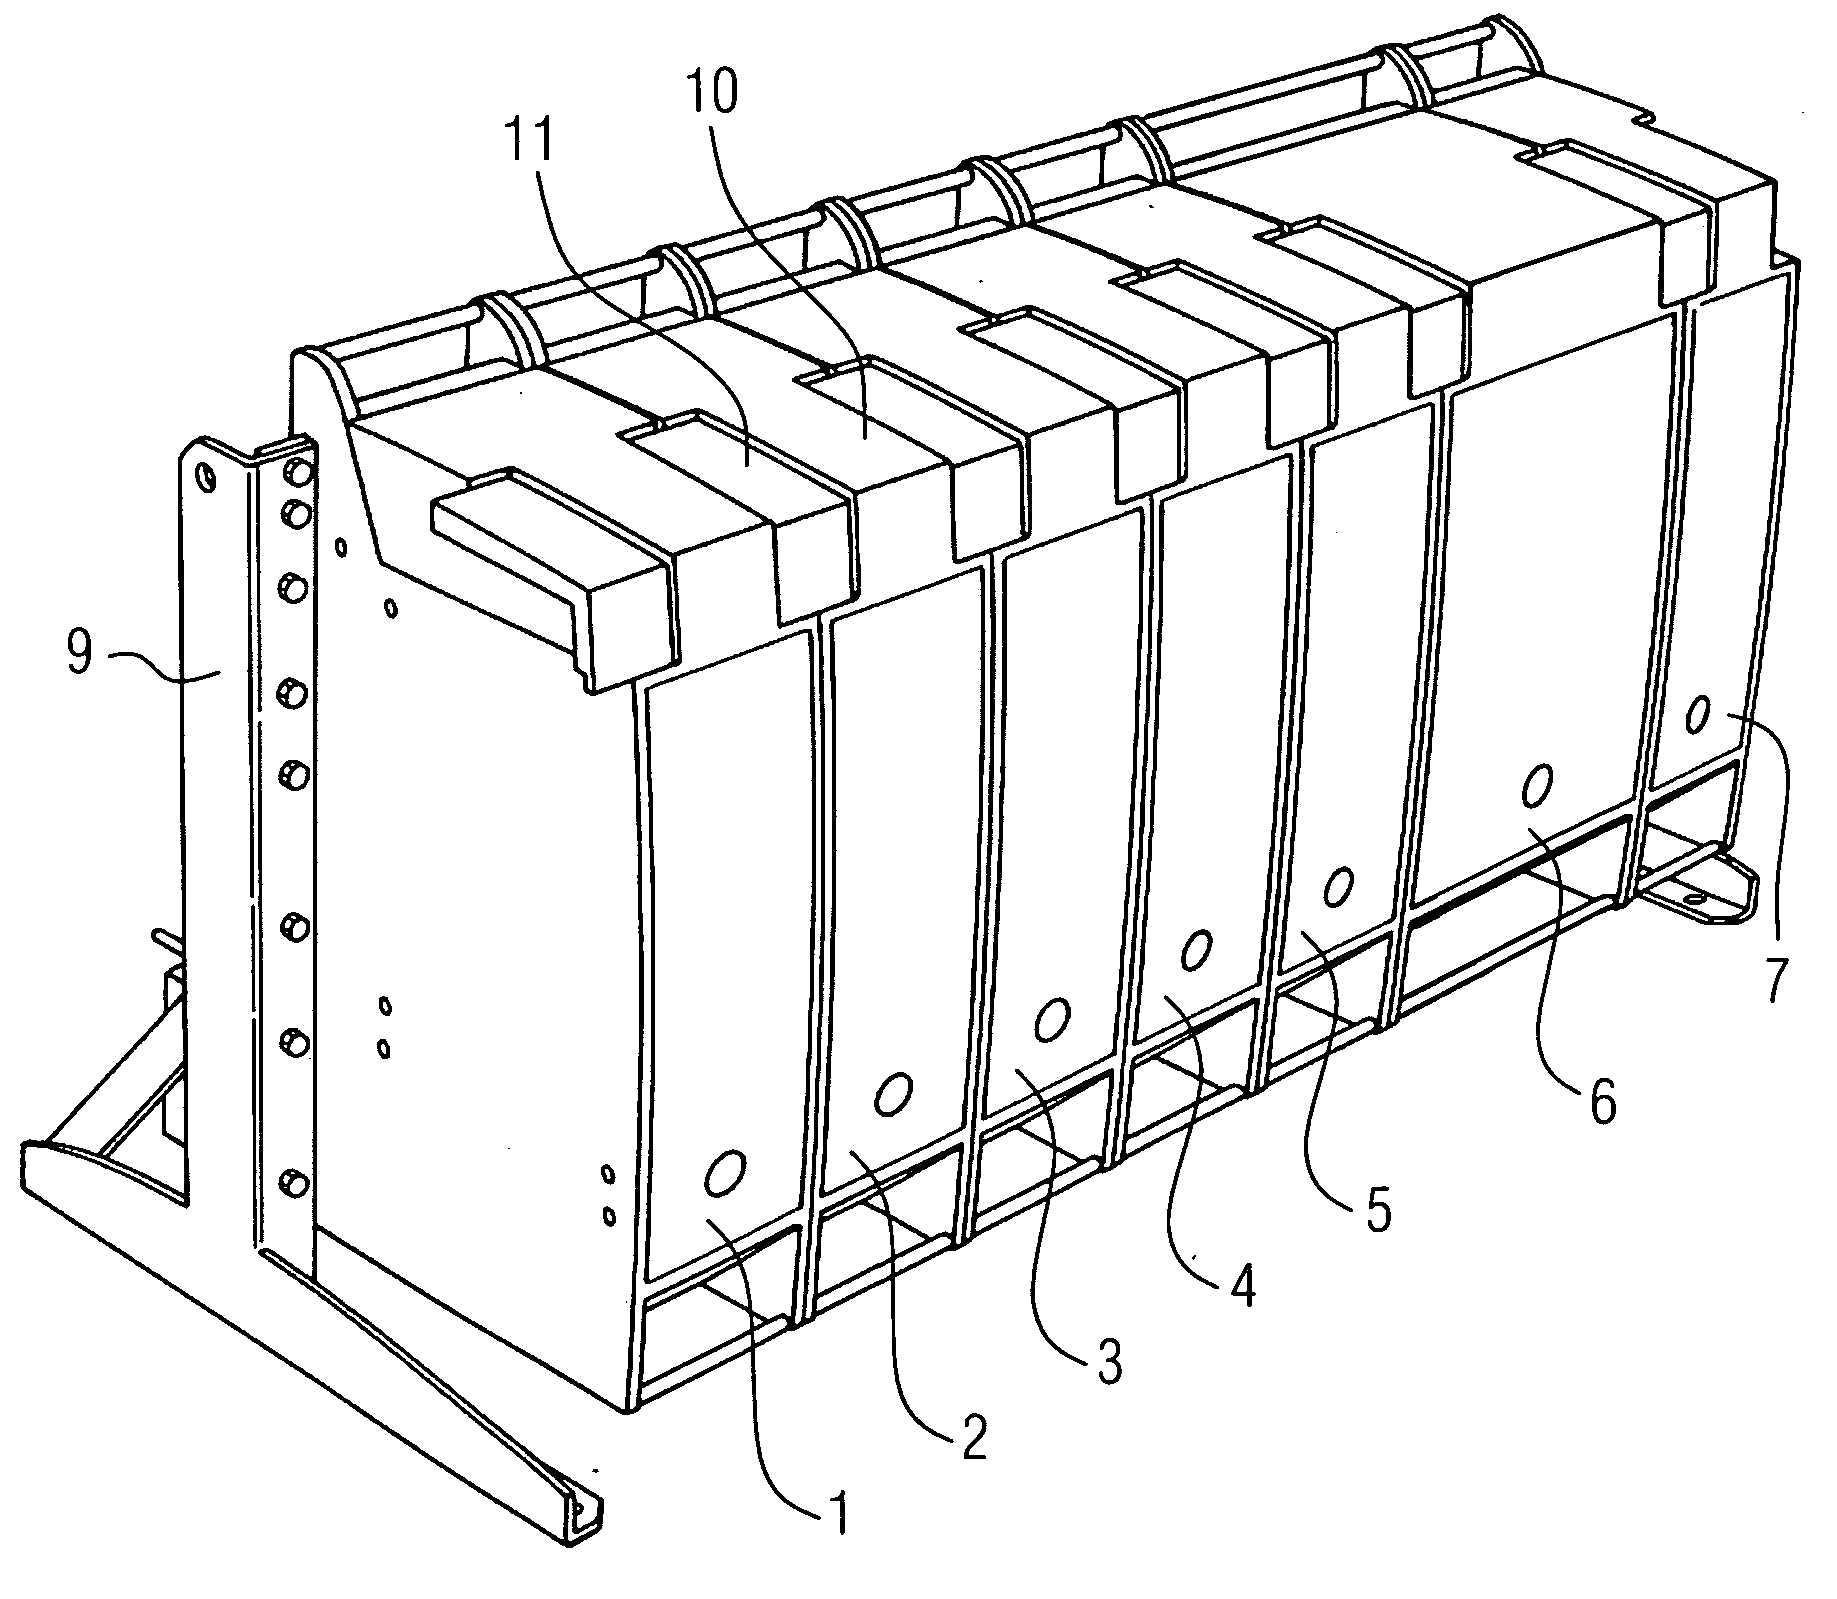 Module for a Modular Microfluidic System